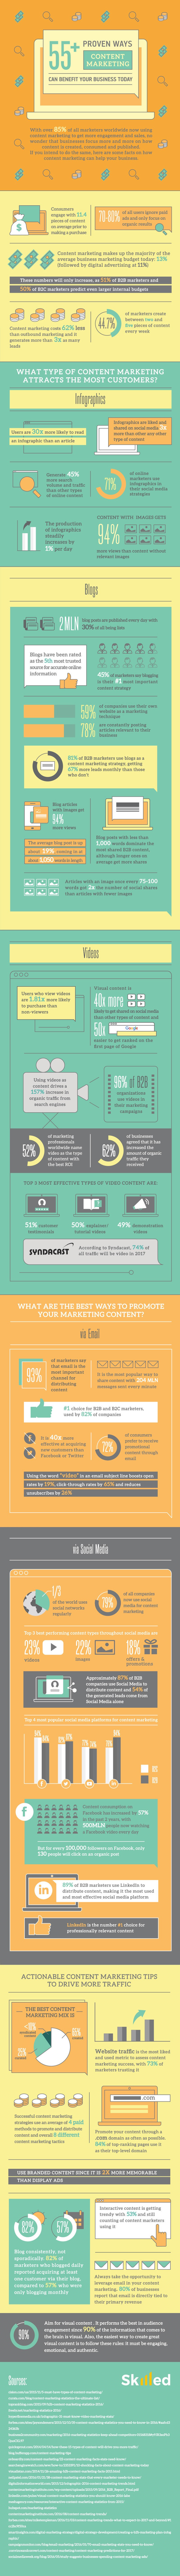 content marketing benefits infographic